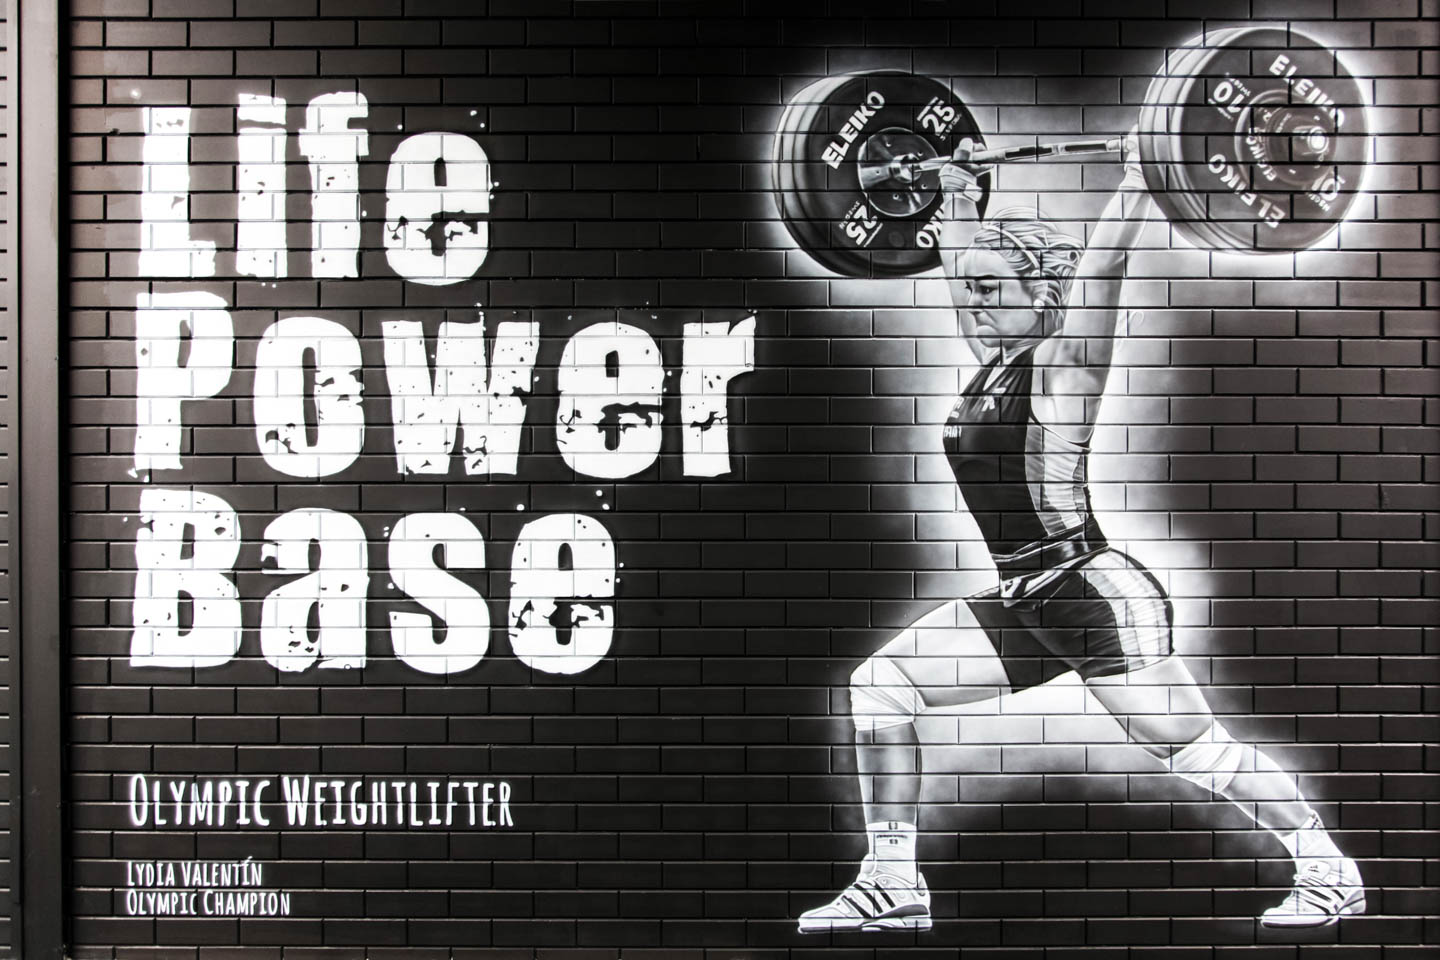 muurschildering Life Power Base, Olympic weightlifter Lydia Valentin